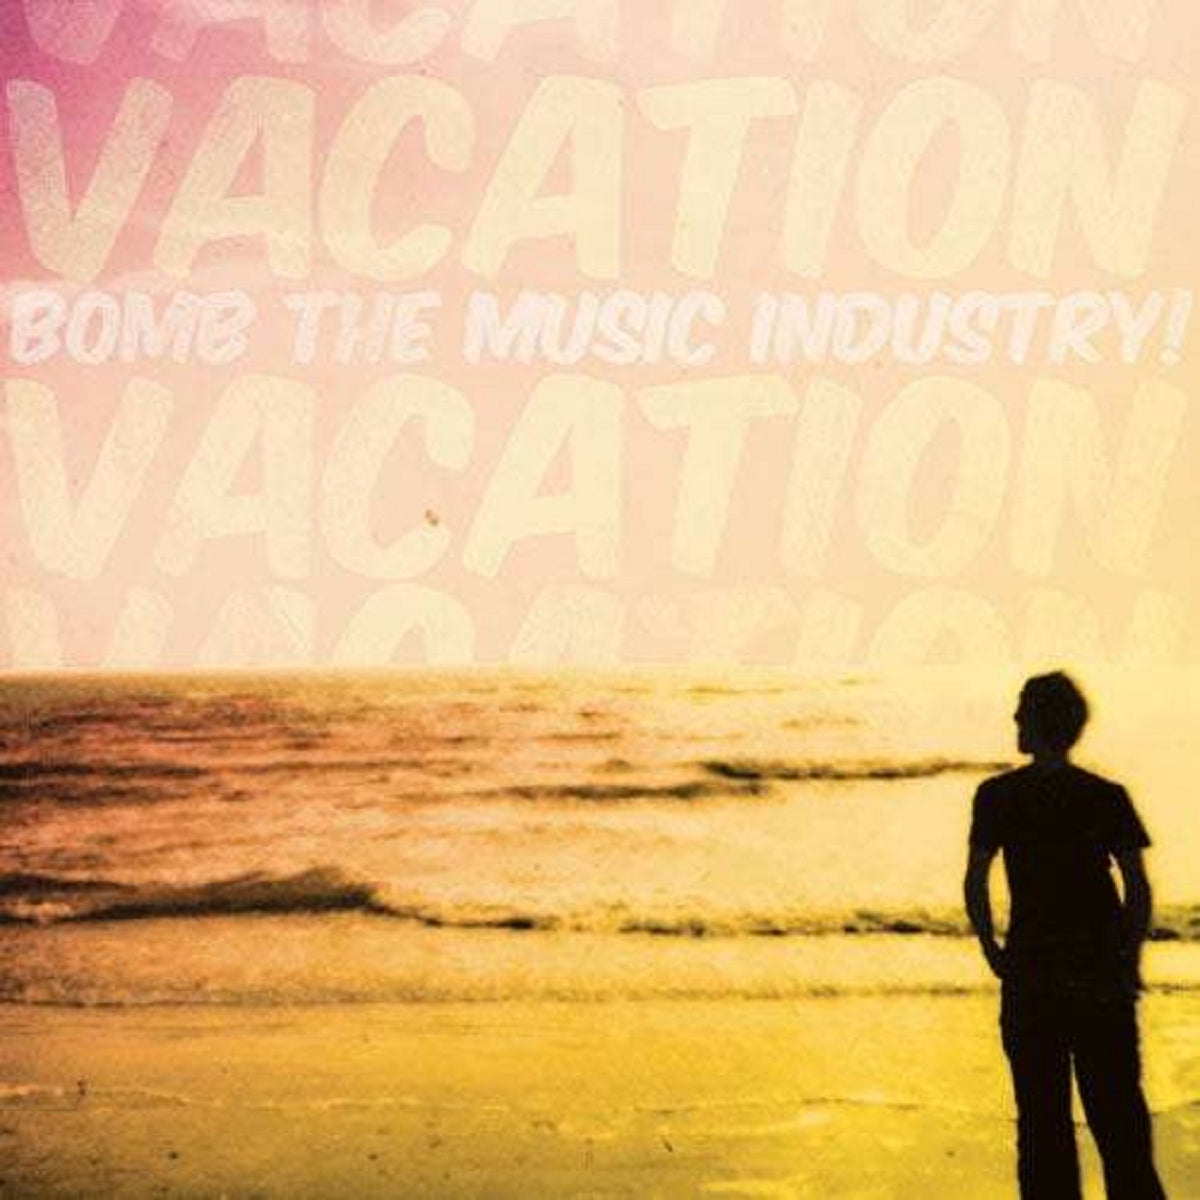 Bomb! The Music Industry - Vacation - BROKEN 8 RECORDS